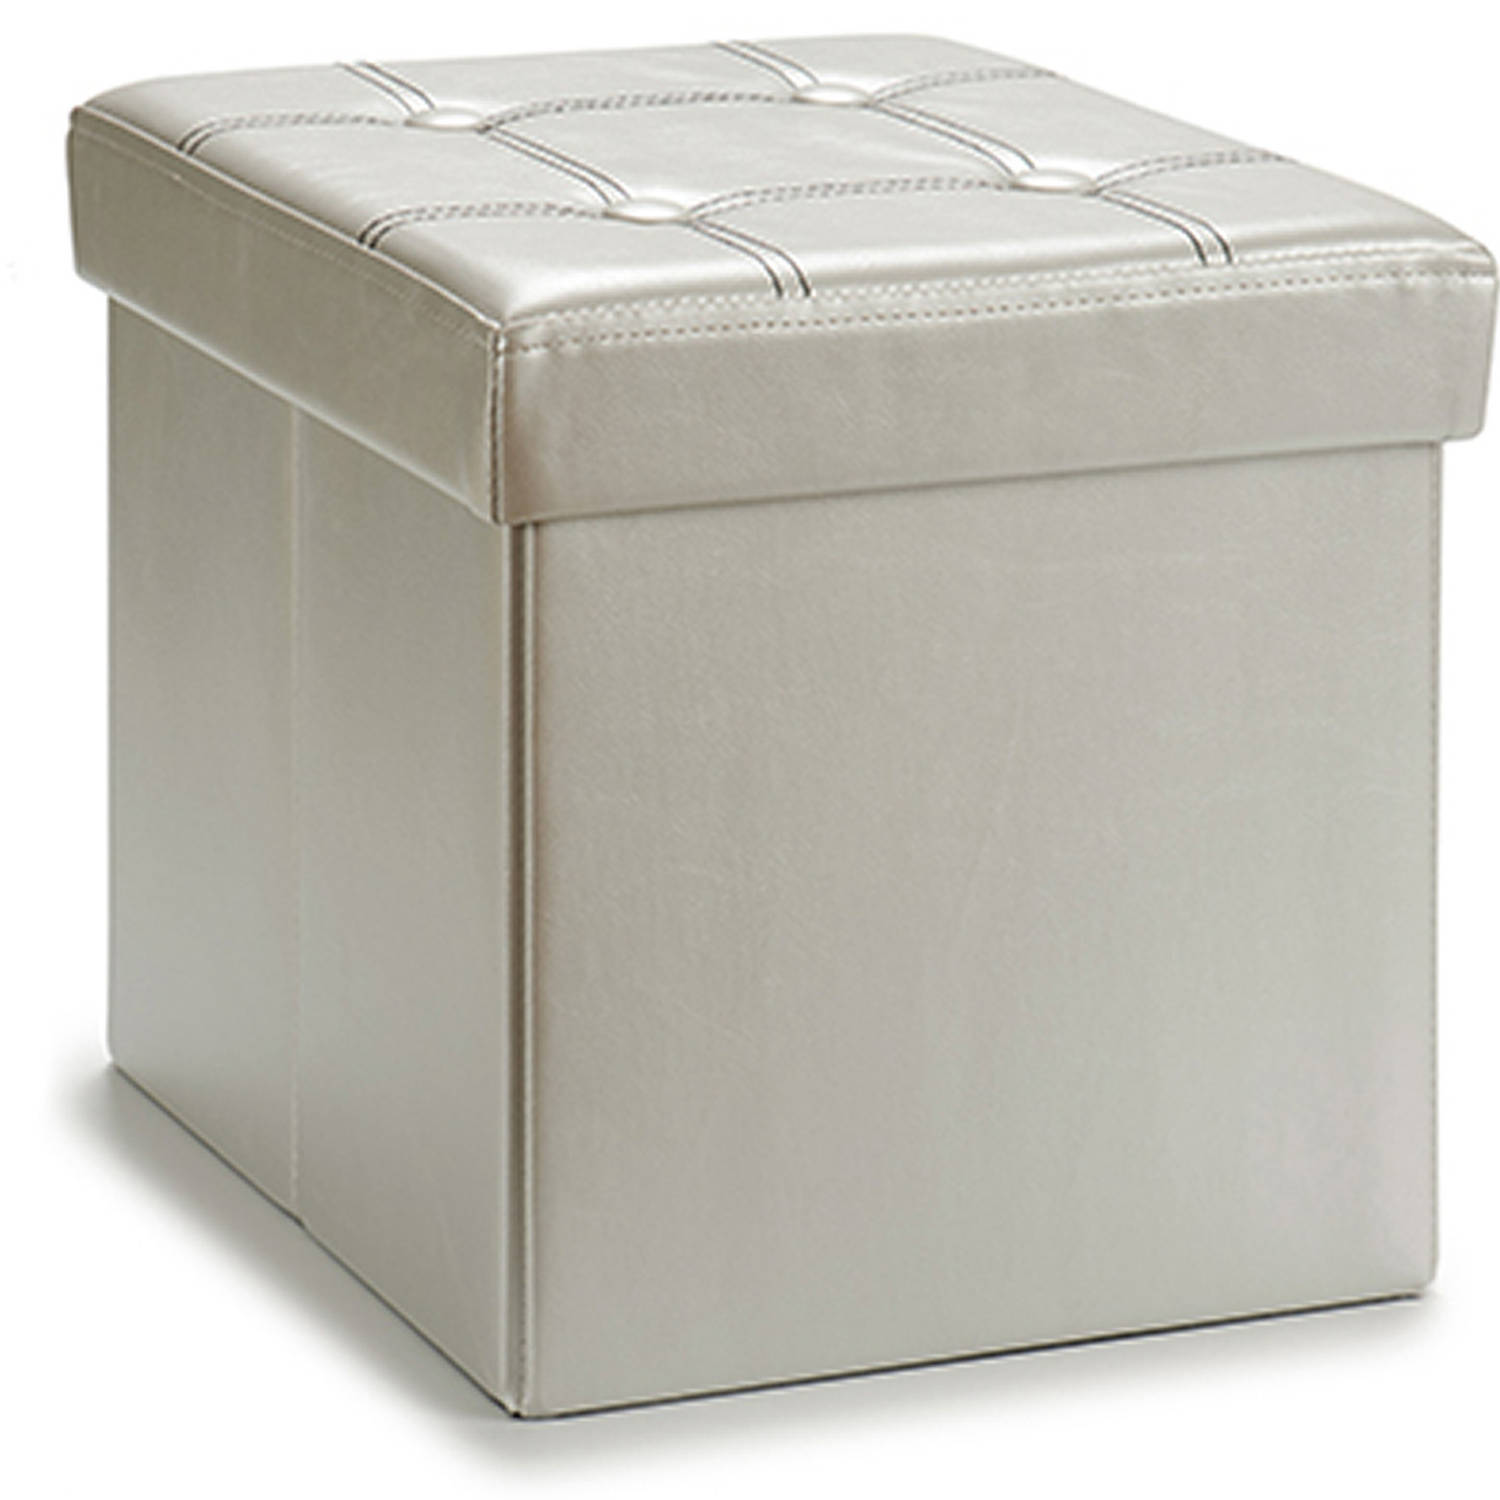 Giftdecor Poef Square BOX hocker opbergbox zilvergrijs polyester-mdf 31 x 31 cm opvouwbaar Poefs